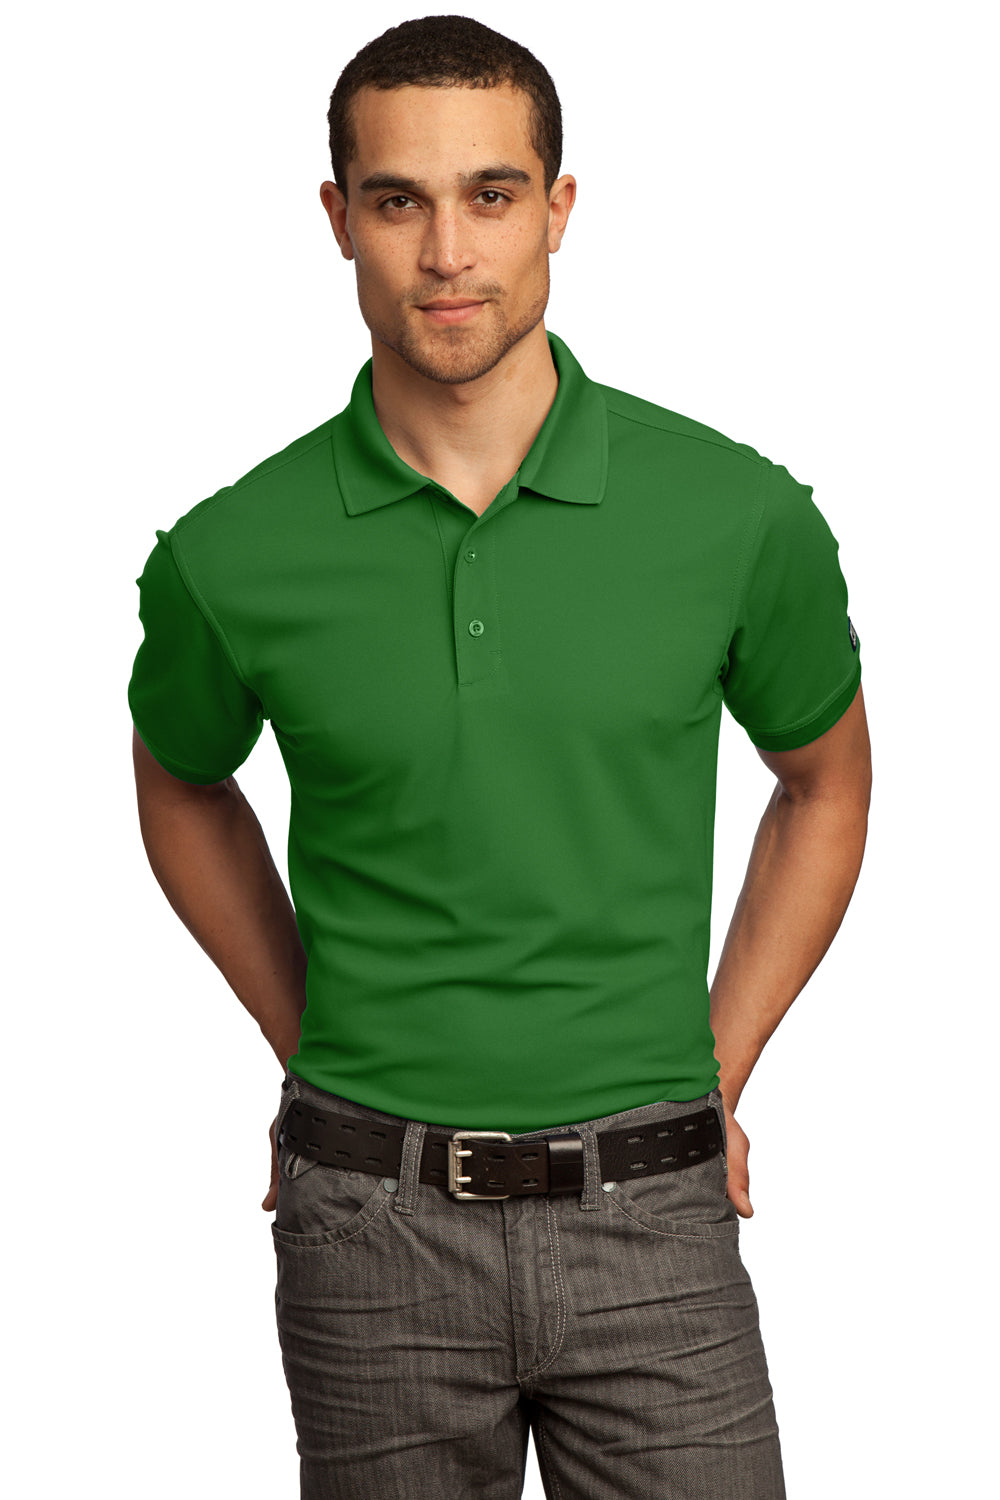 Ogio OG101 Mens Caliber 2.0 Moisture Wicking Short Sleeve Polo Shirt Gridiron Green Front